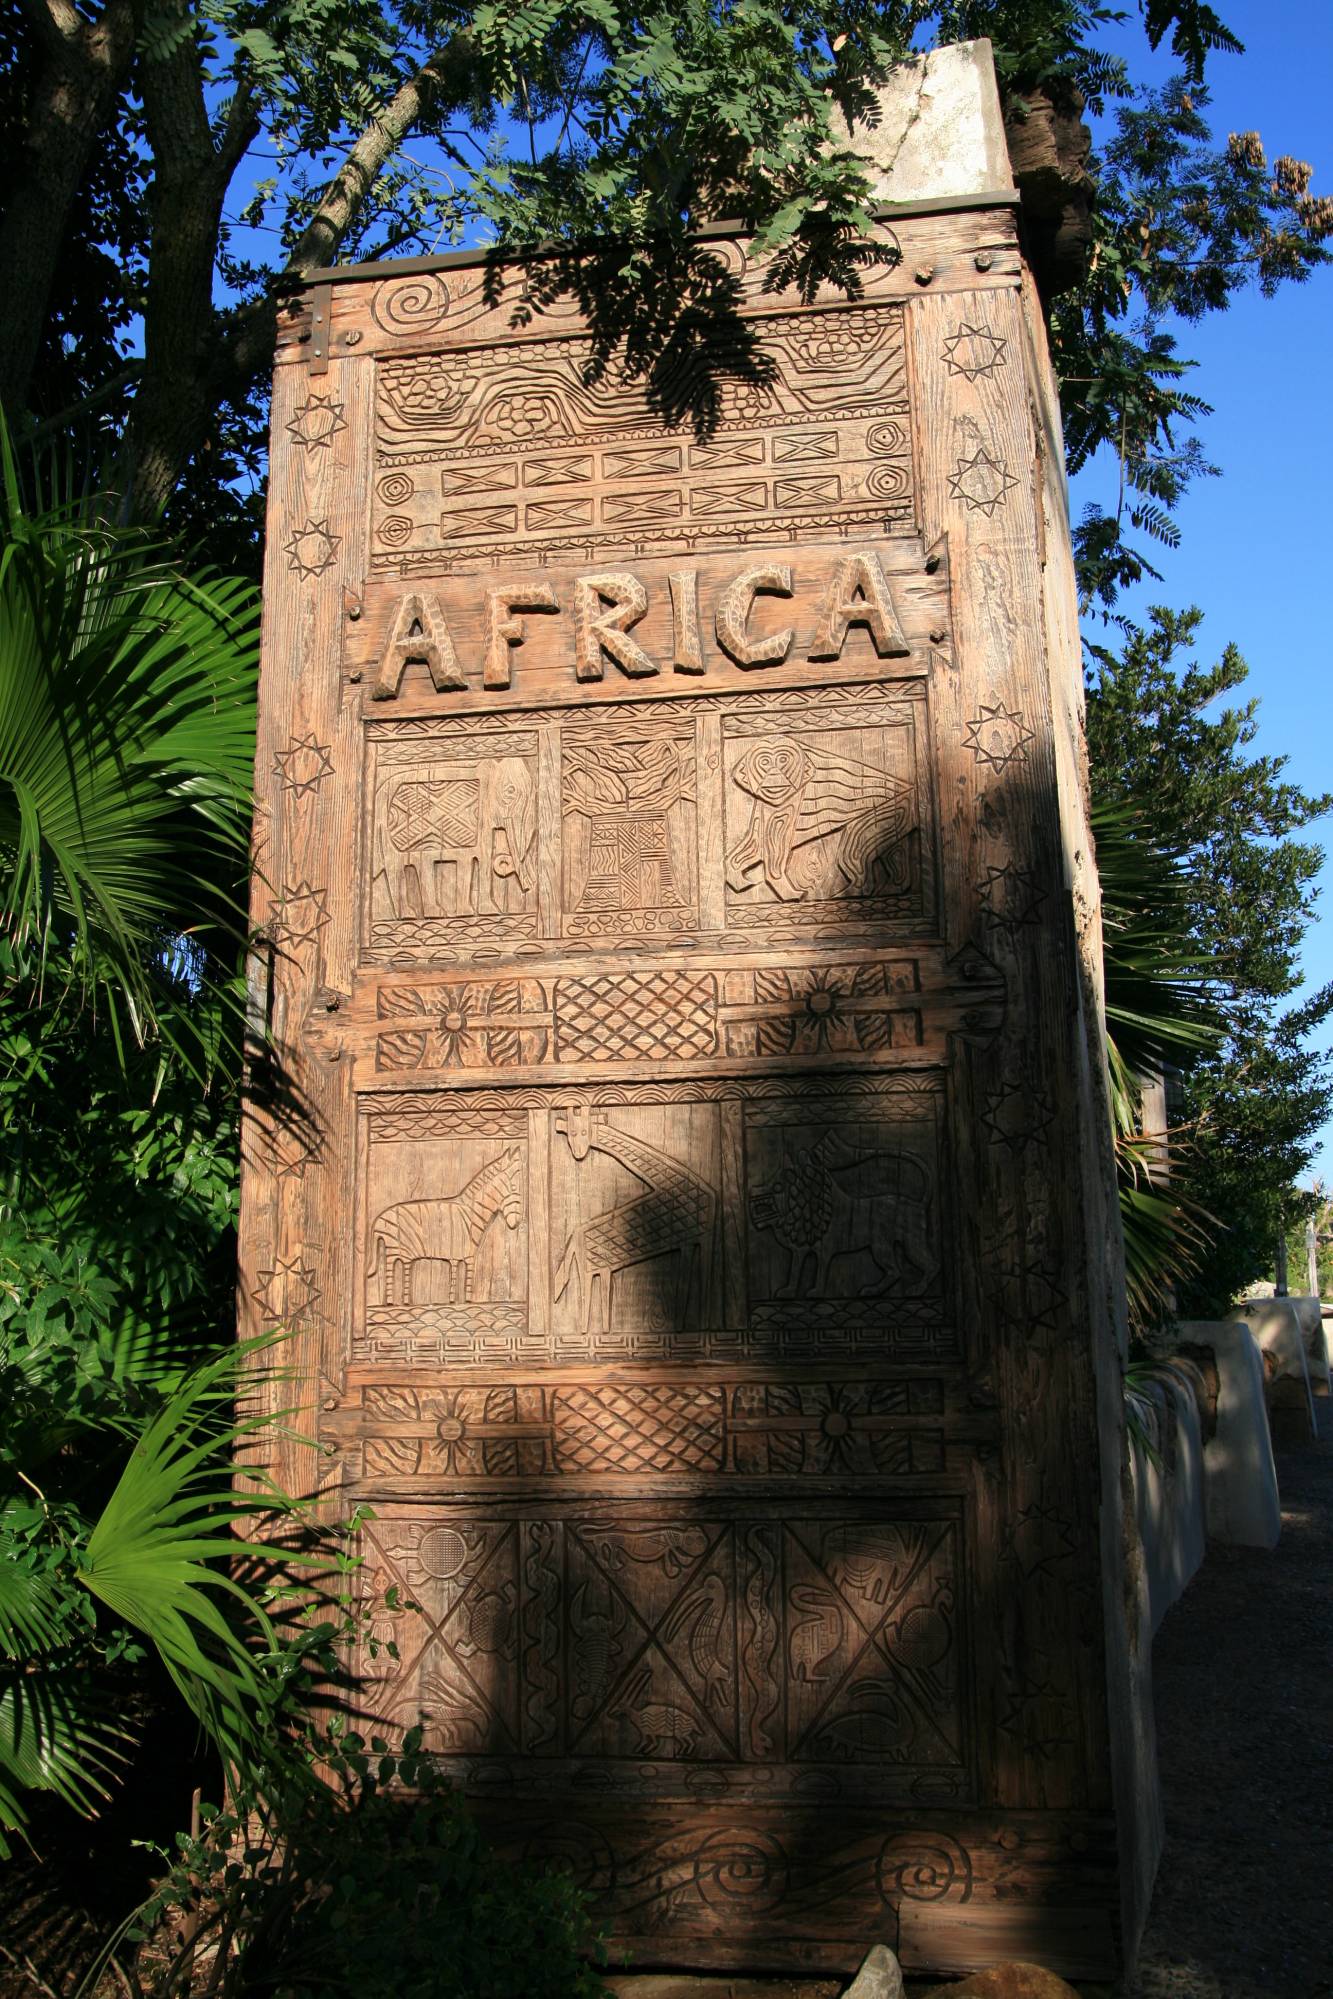 Africa Sign at Animal Kingdom